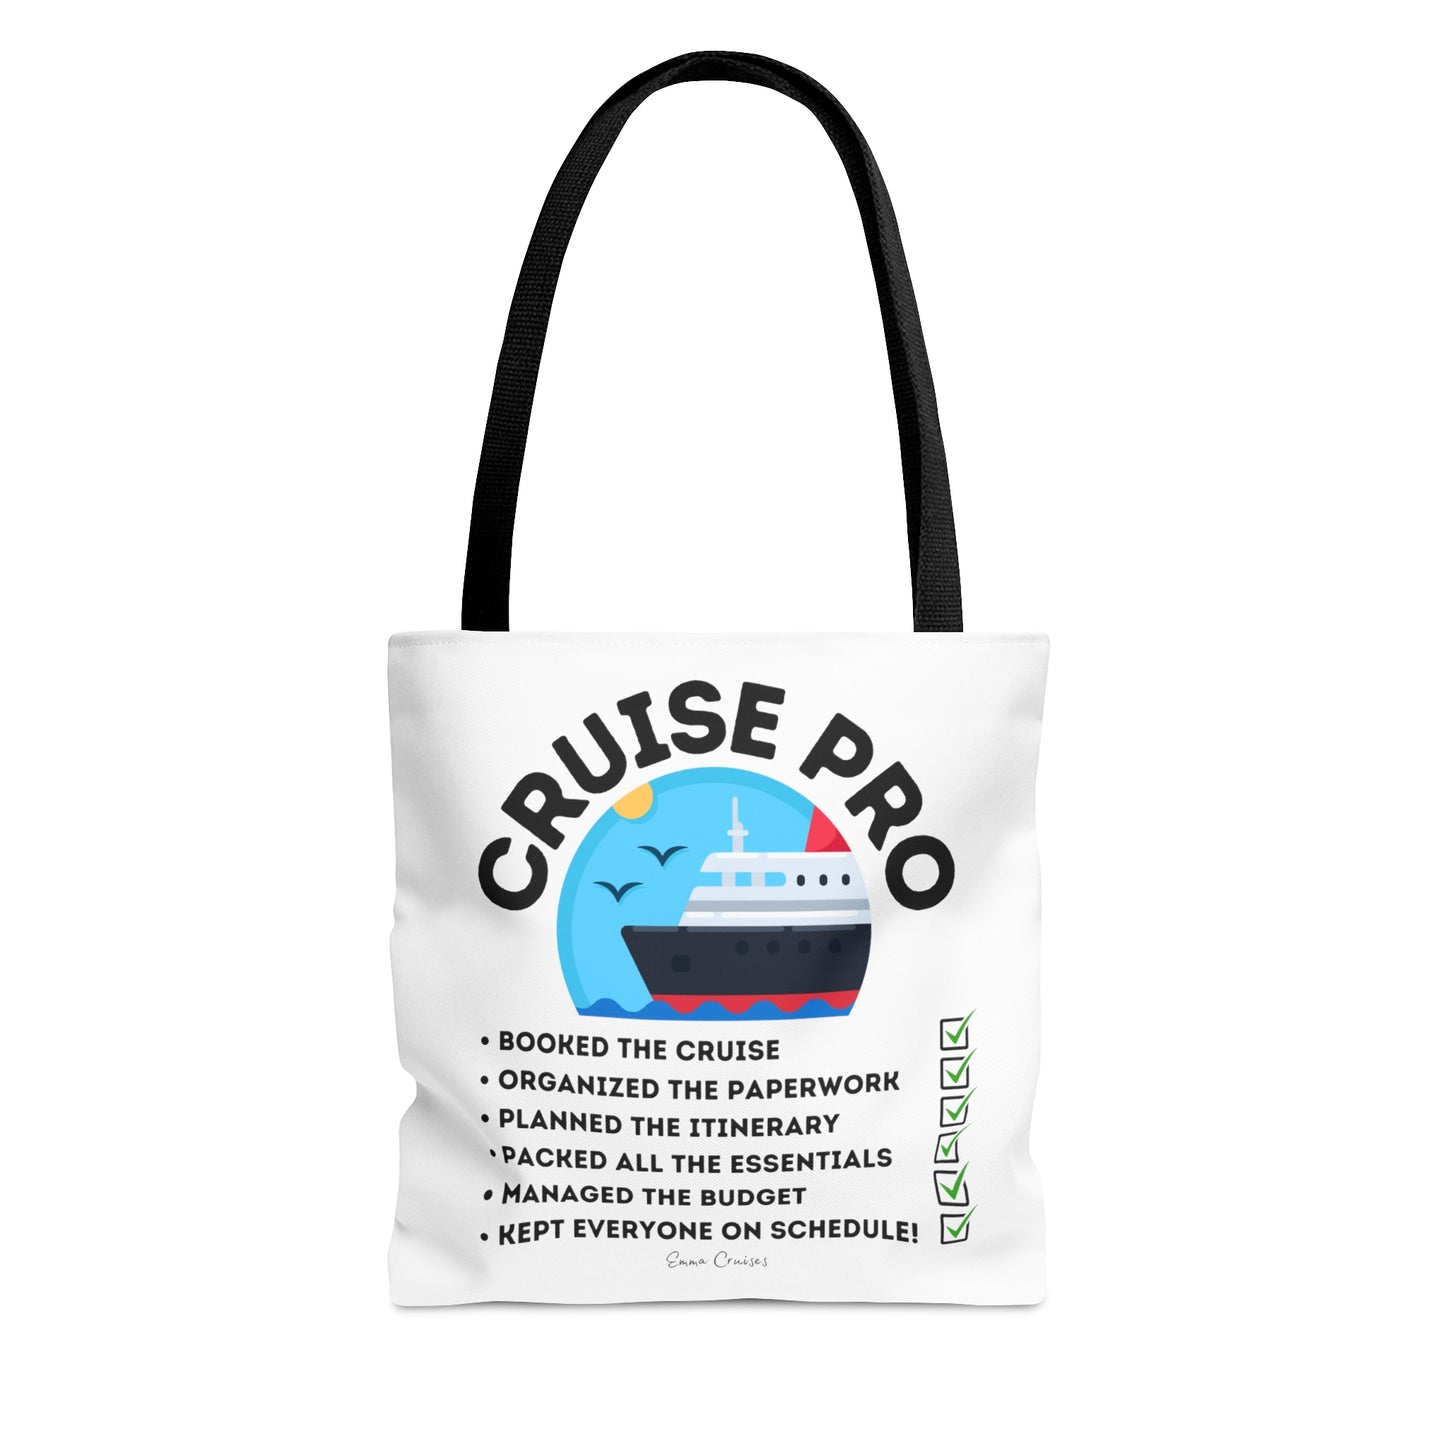 I'm a Cruise Pro - Bag